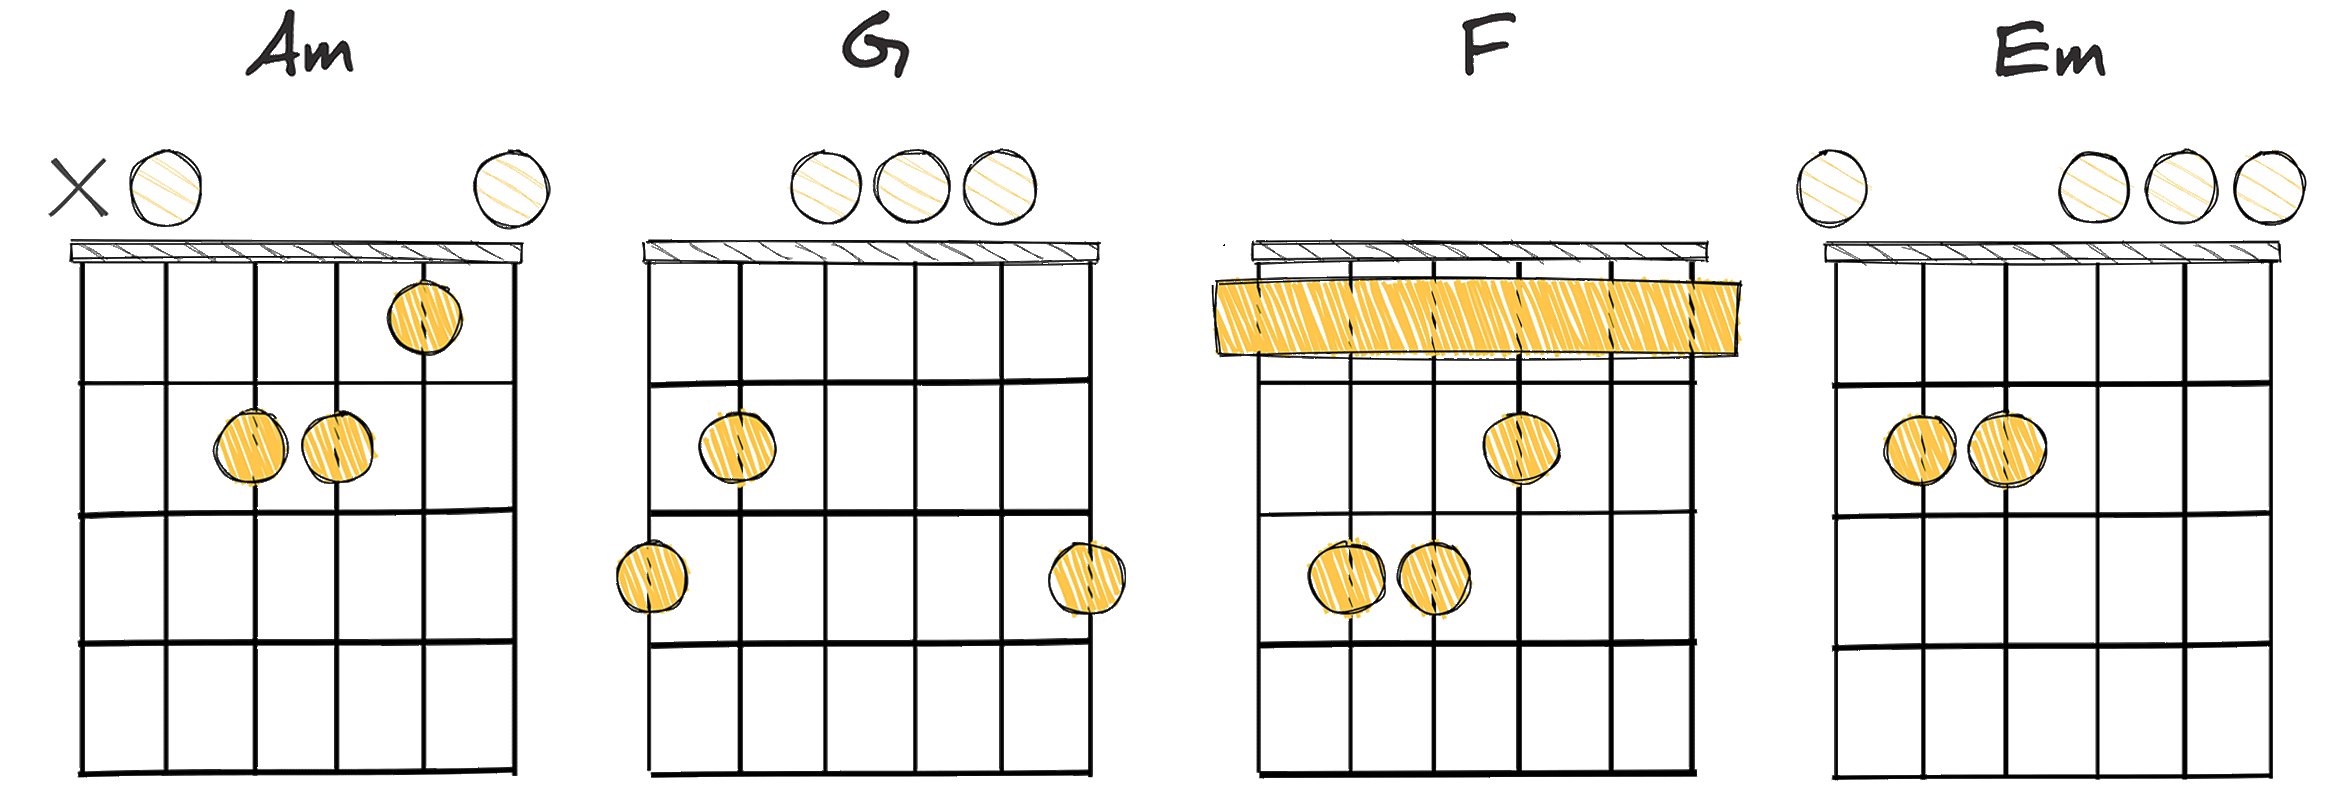 vi-V-IV-iii (6-5-4-3) chords diagram